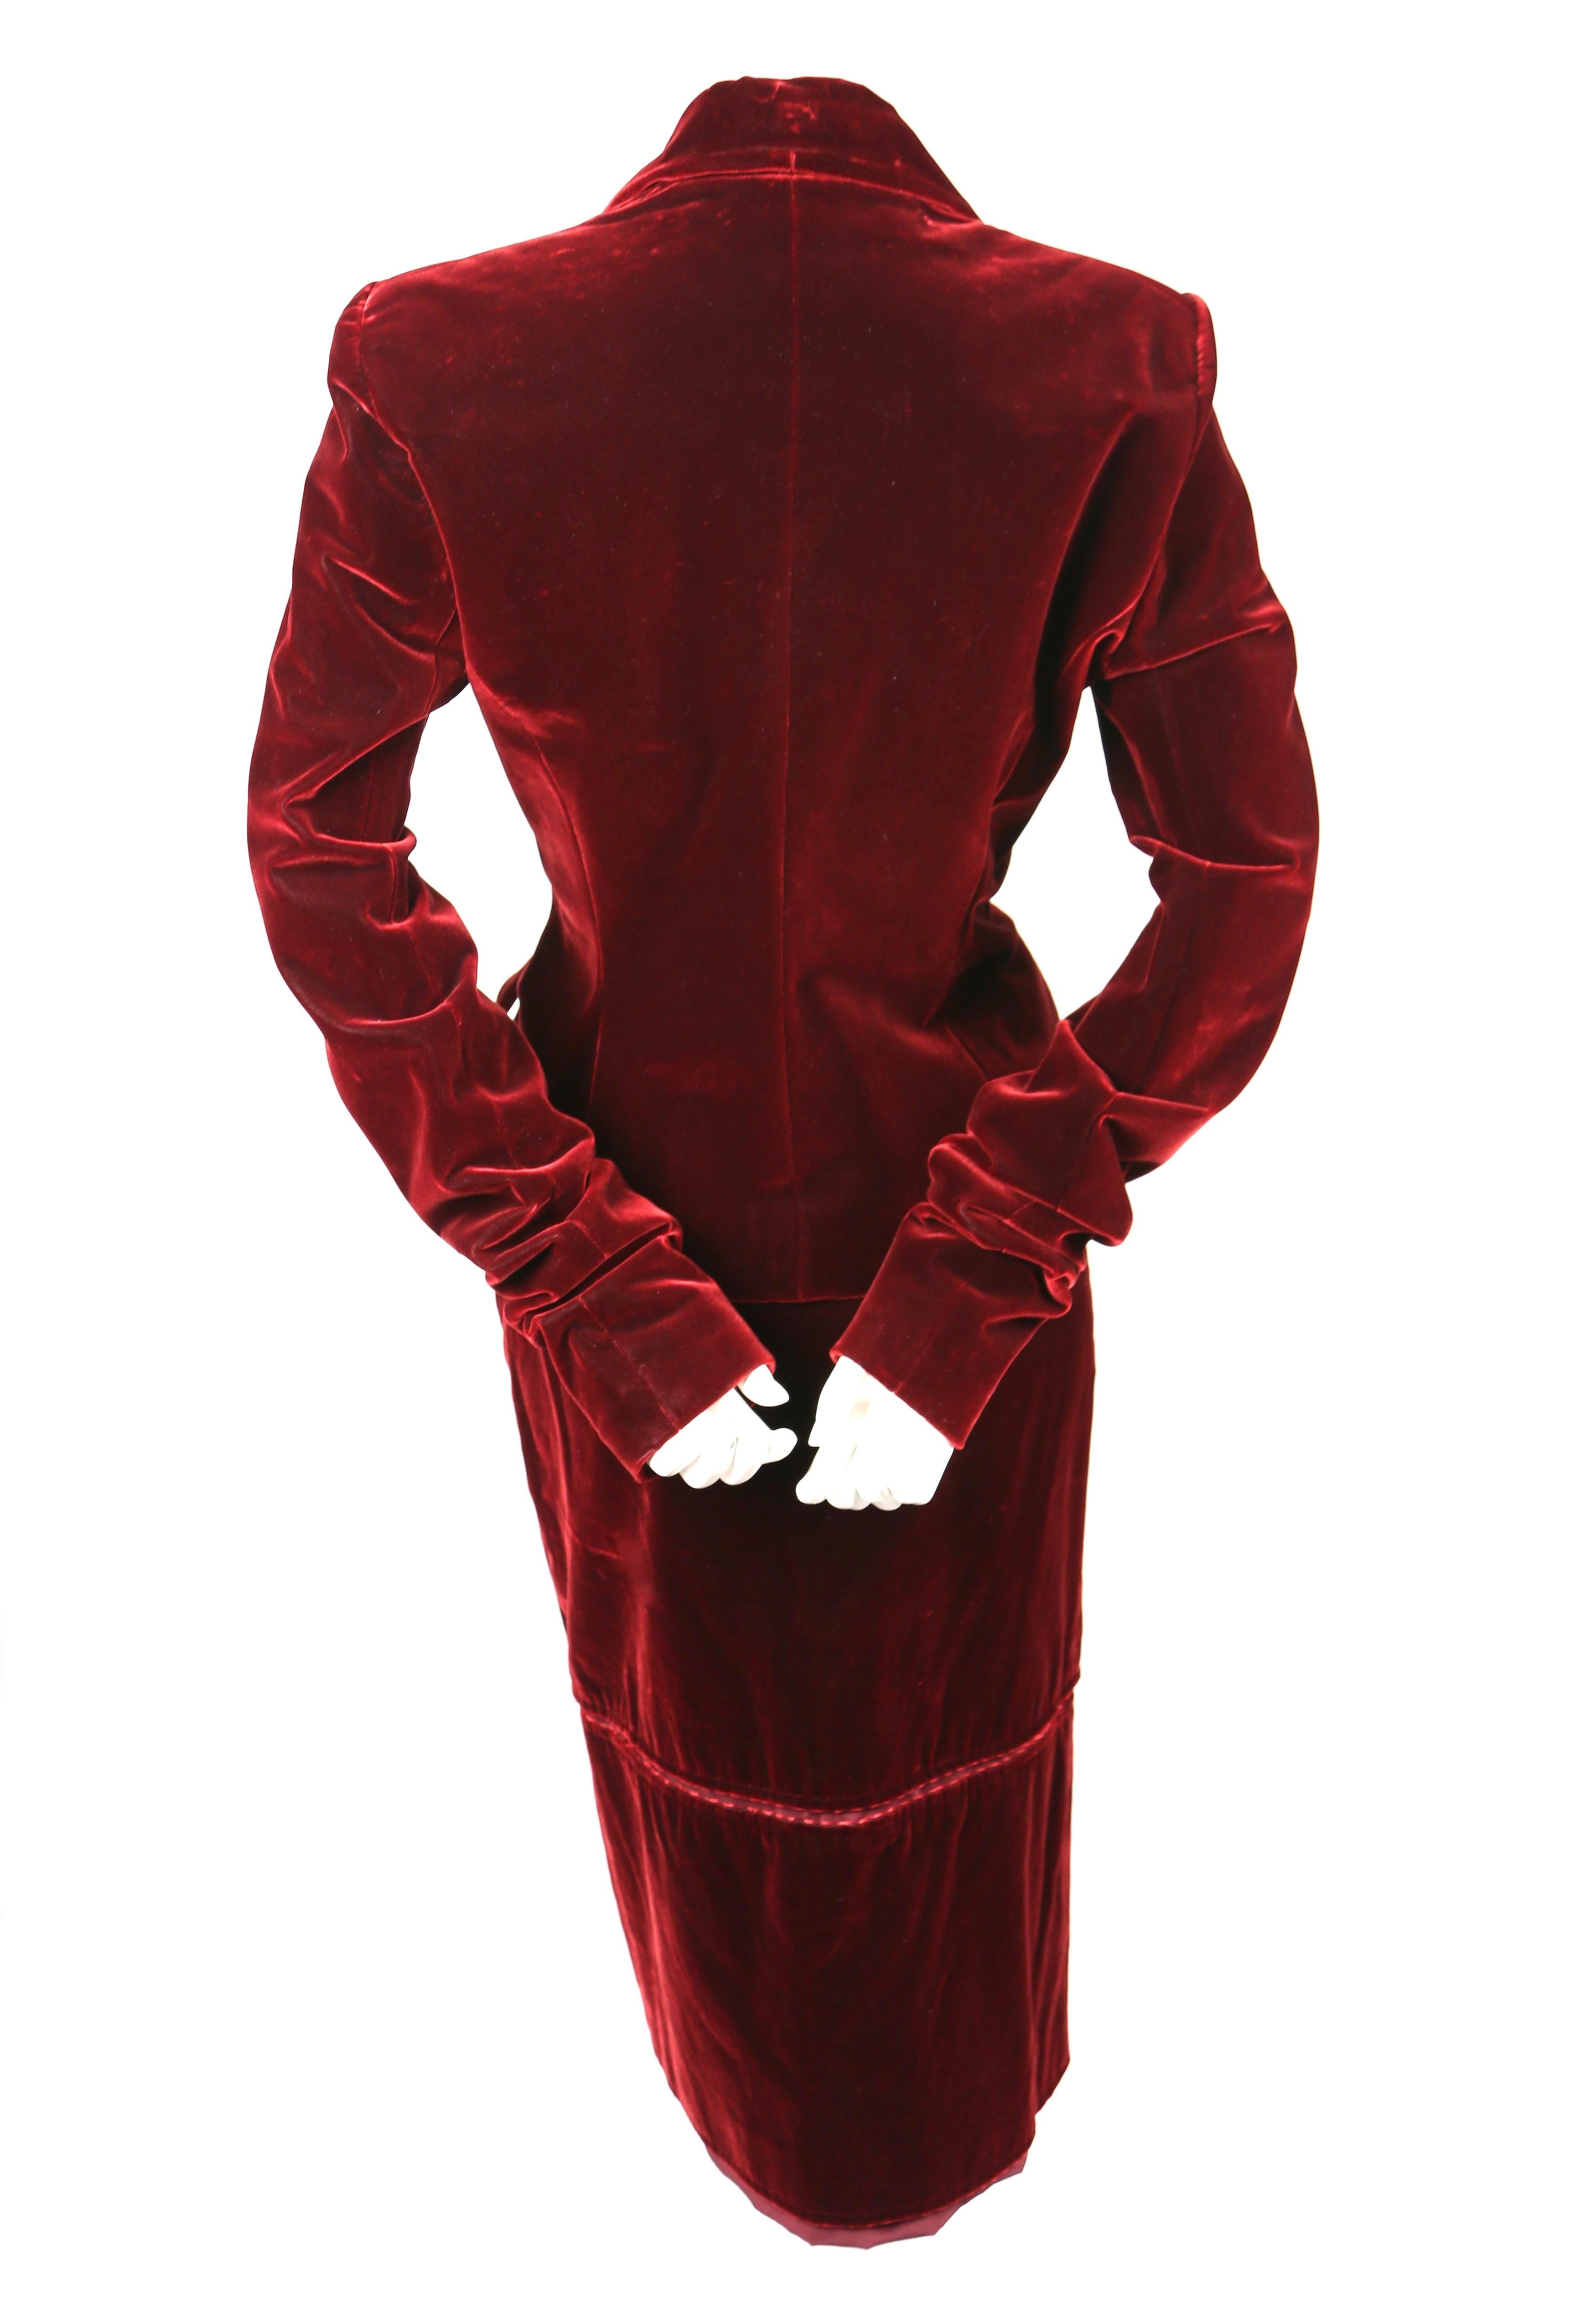 2002 TOM FORD for YVES SAINT LAURENT burgundy velvet runway suit In Good Condition For Sale In San Fransisco, CA